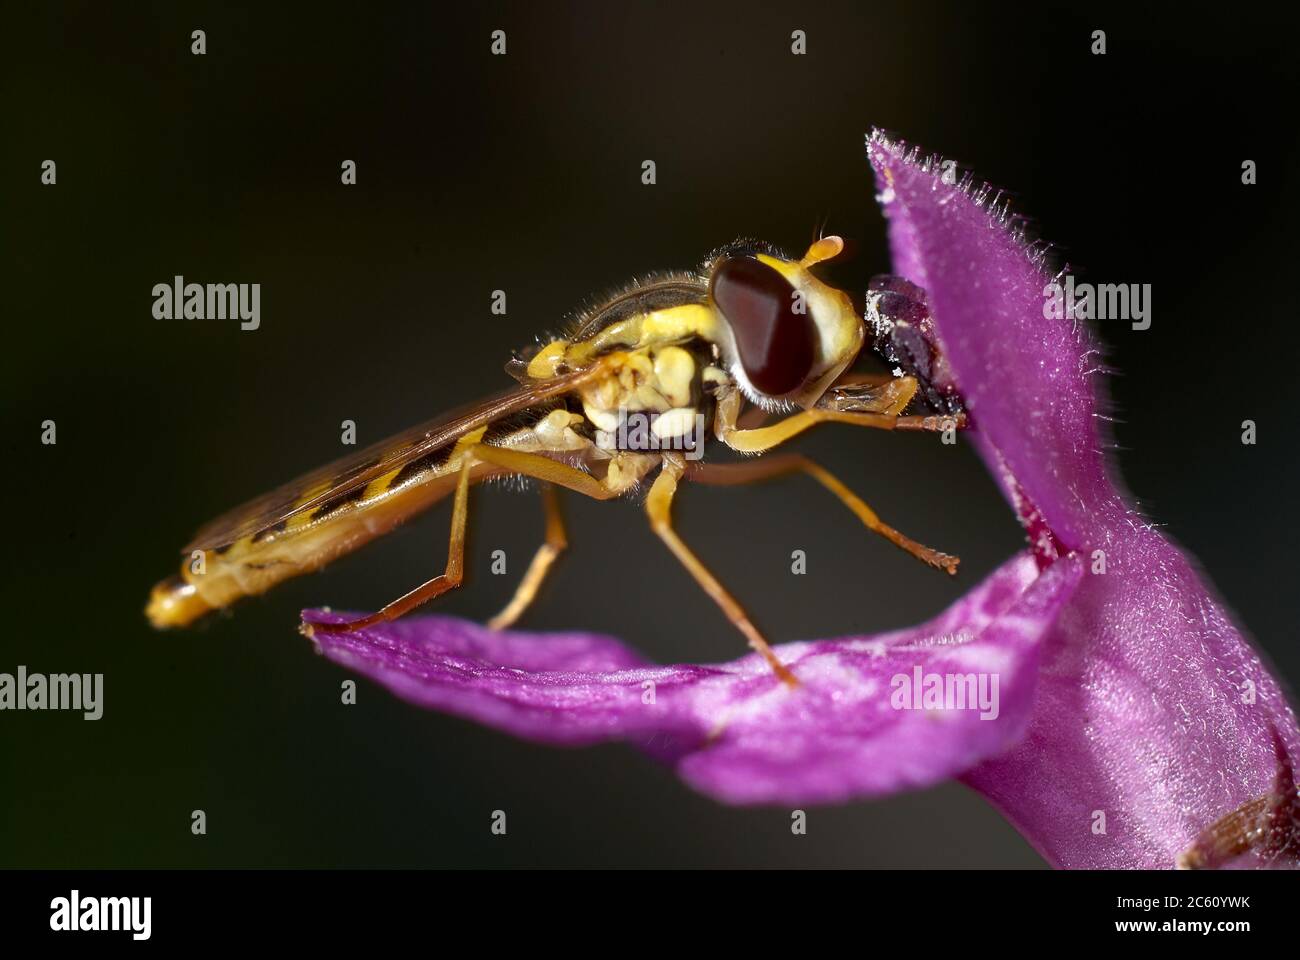 Bee Pollinating Small Purple Flower, Macro View Stock Photo